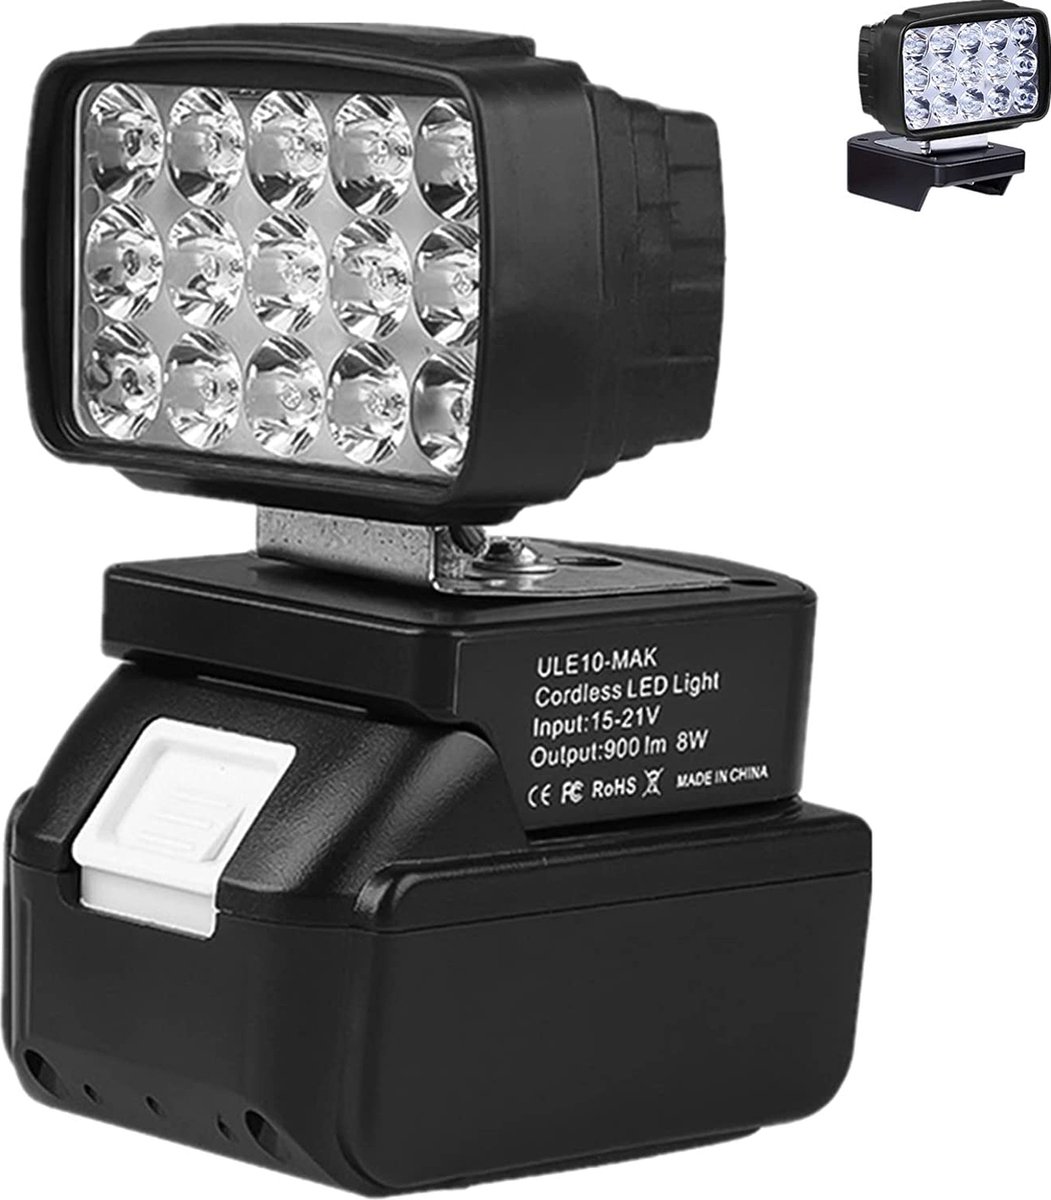 Batterijlamp geschikt voor Makita 14.4 V-18 V - Acculamp lamp - accu bouwlamp accu werklamp - 8W 900lm LED-batterijpot